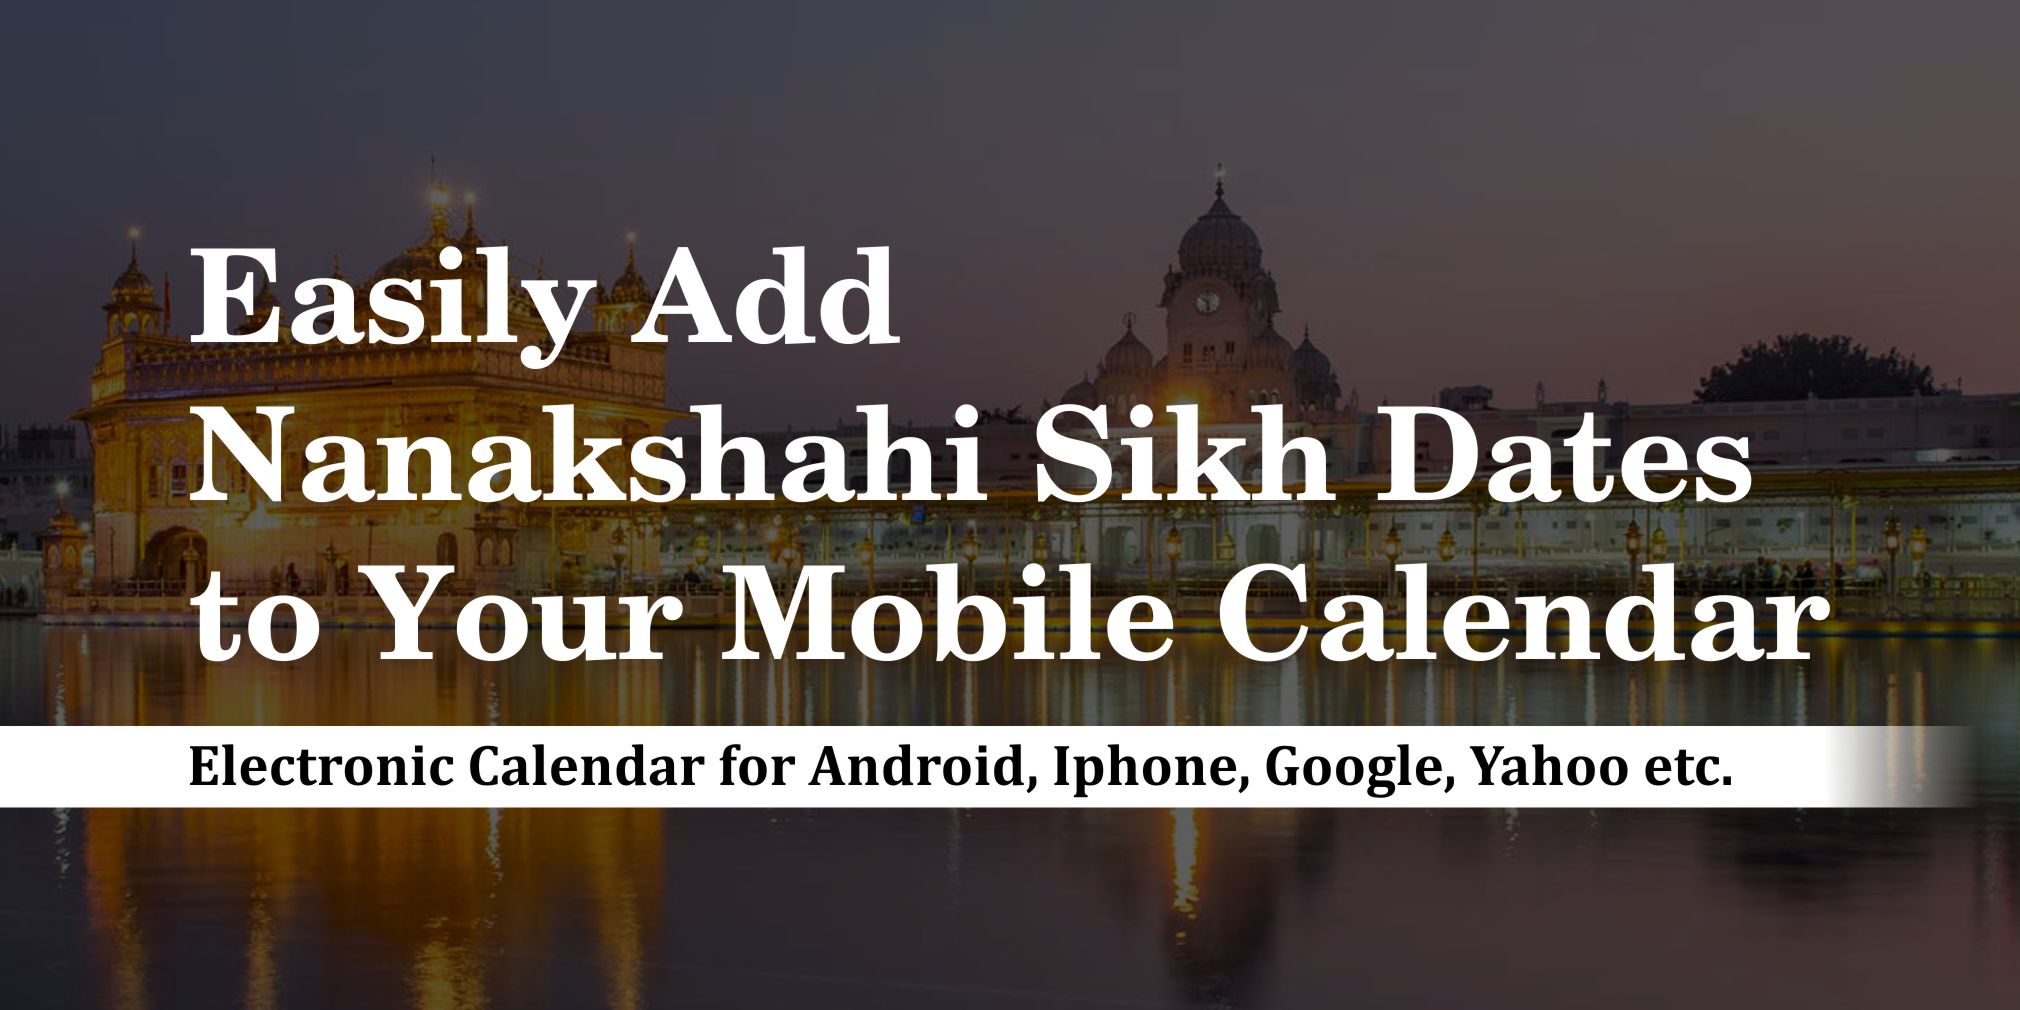 Easily Add Nanakshahi Sikh Dates to Your Calendar